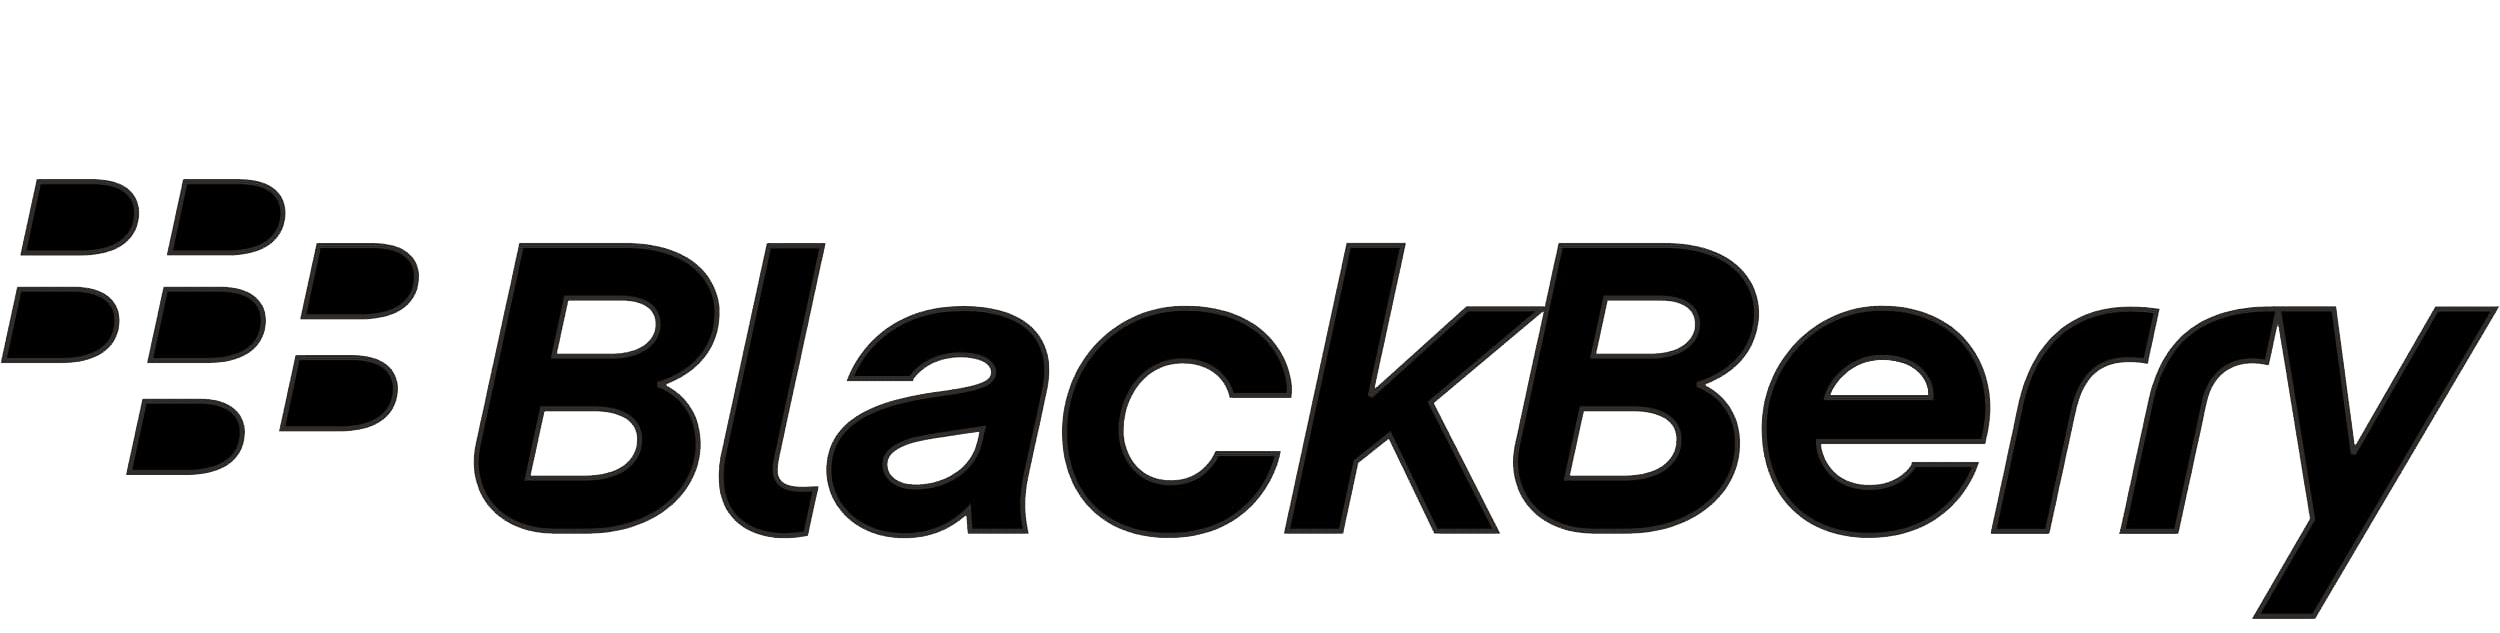 BlackBerry-logo copy